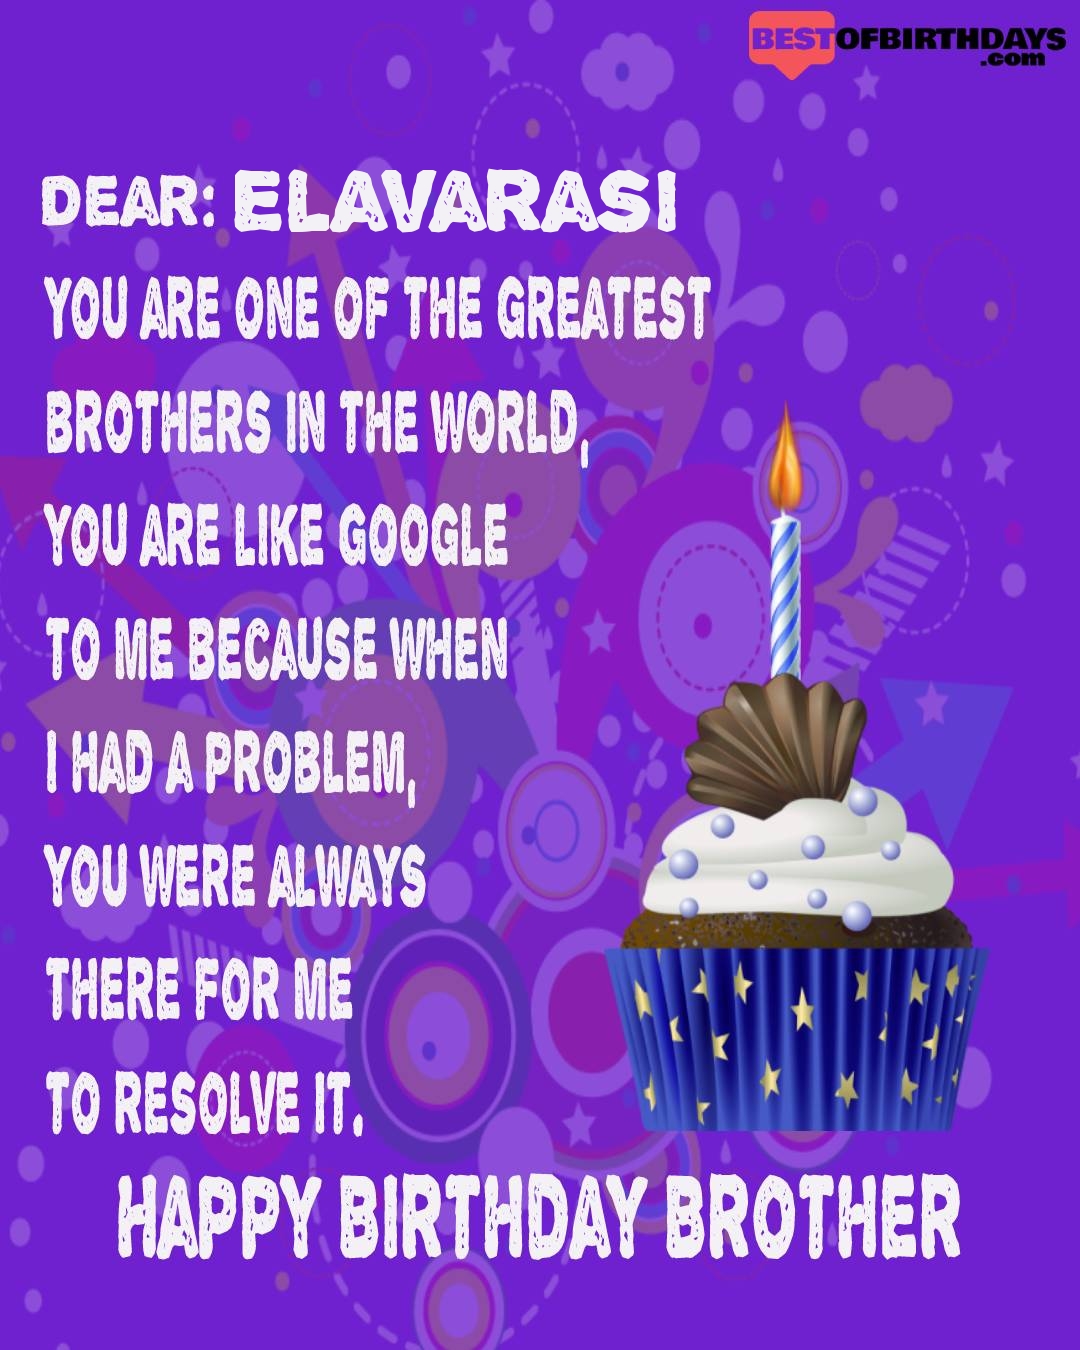 Happy birthday elavarasi bhai brother bro